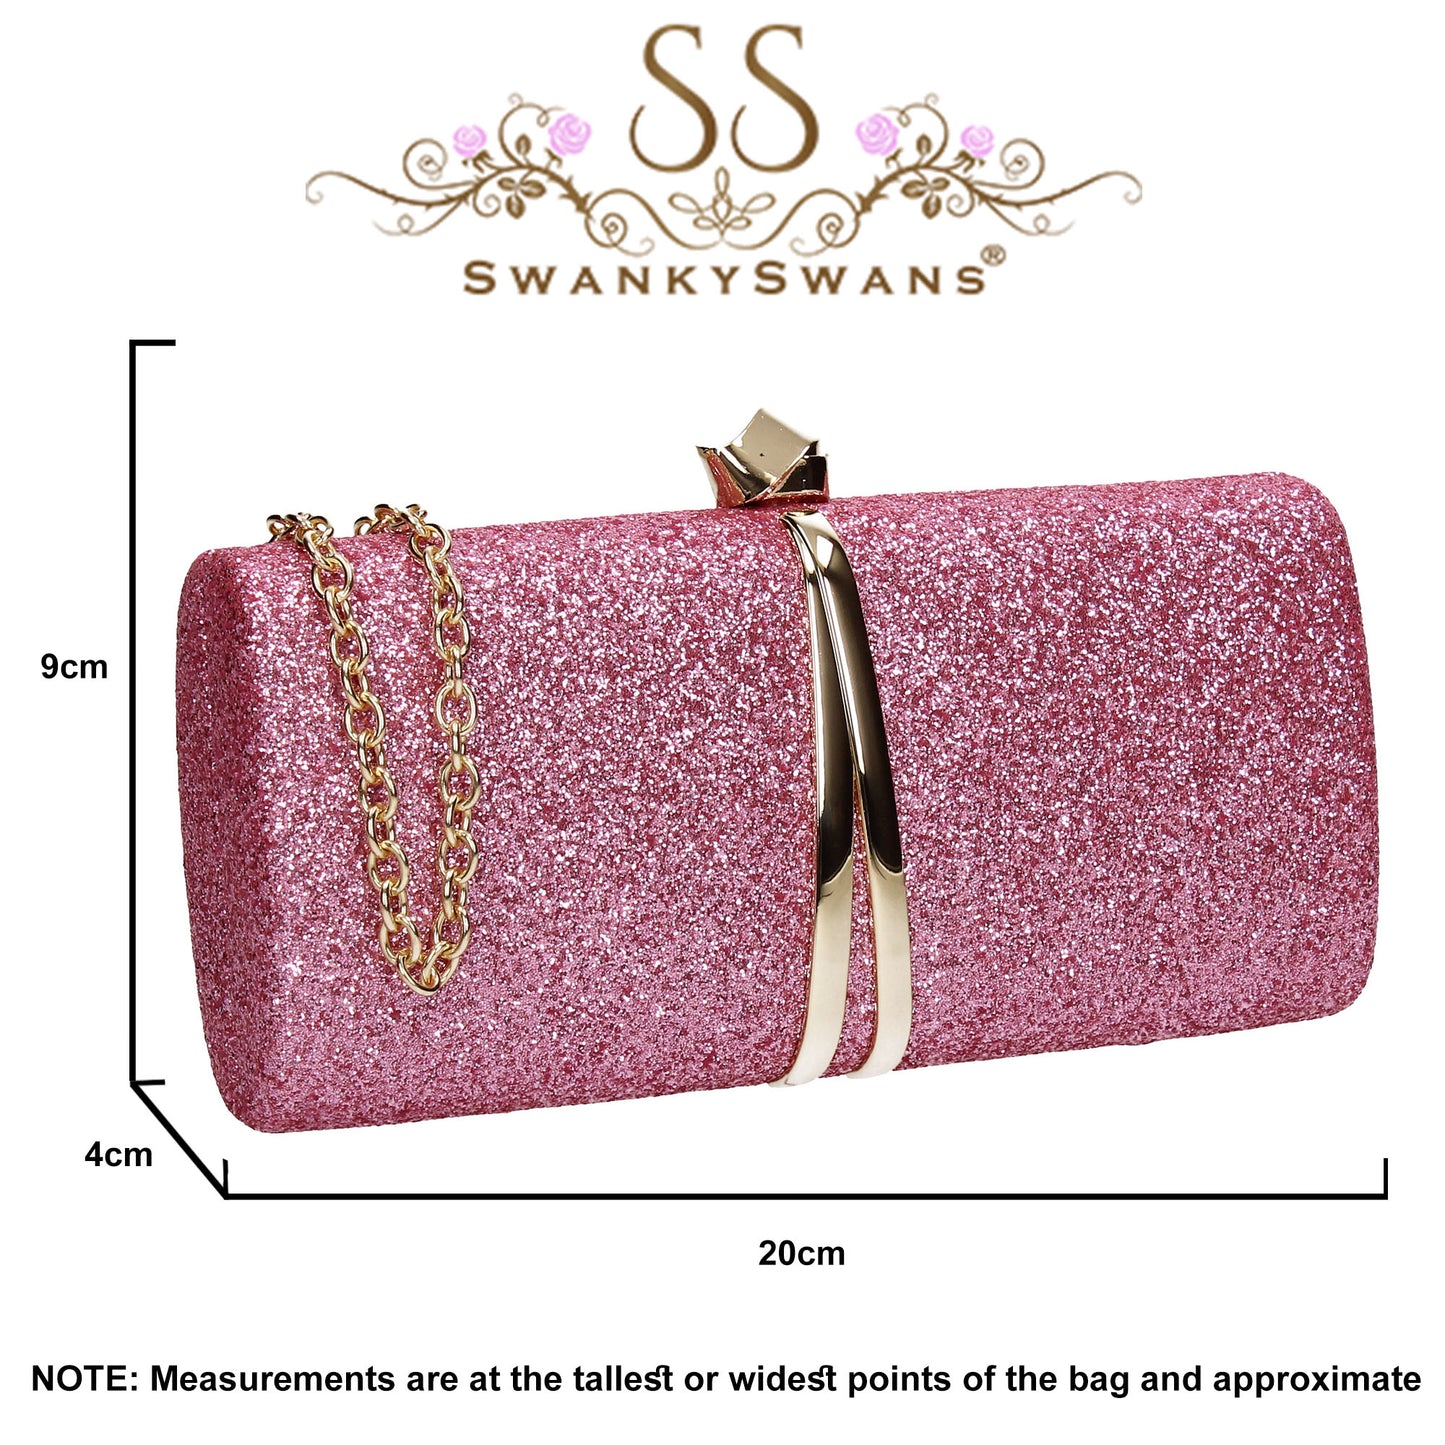 SWANKYSWANS Daisy Clutch Bag Pink Cute Cheap Clutch Bag For Weddings School and Work